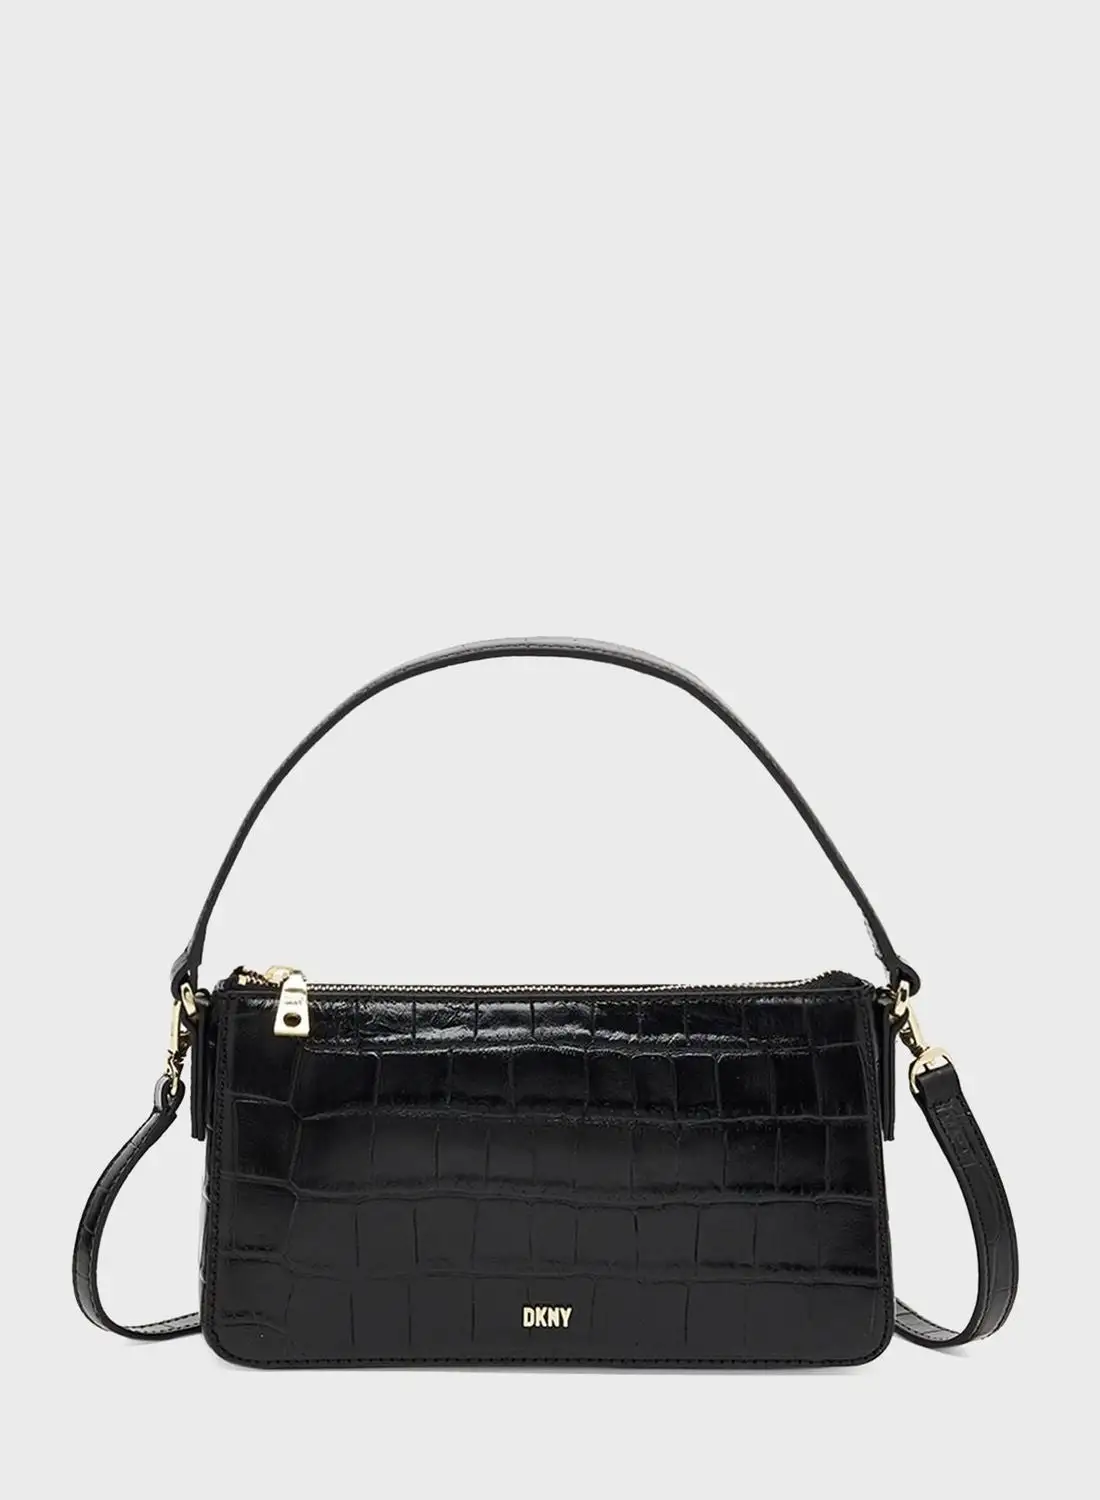 DKNY Irina Croc Leather Crossbody Bag